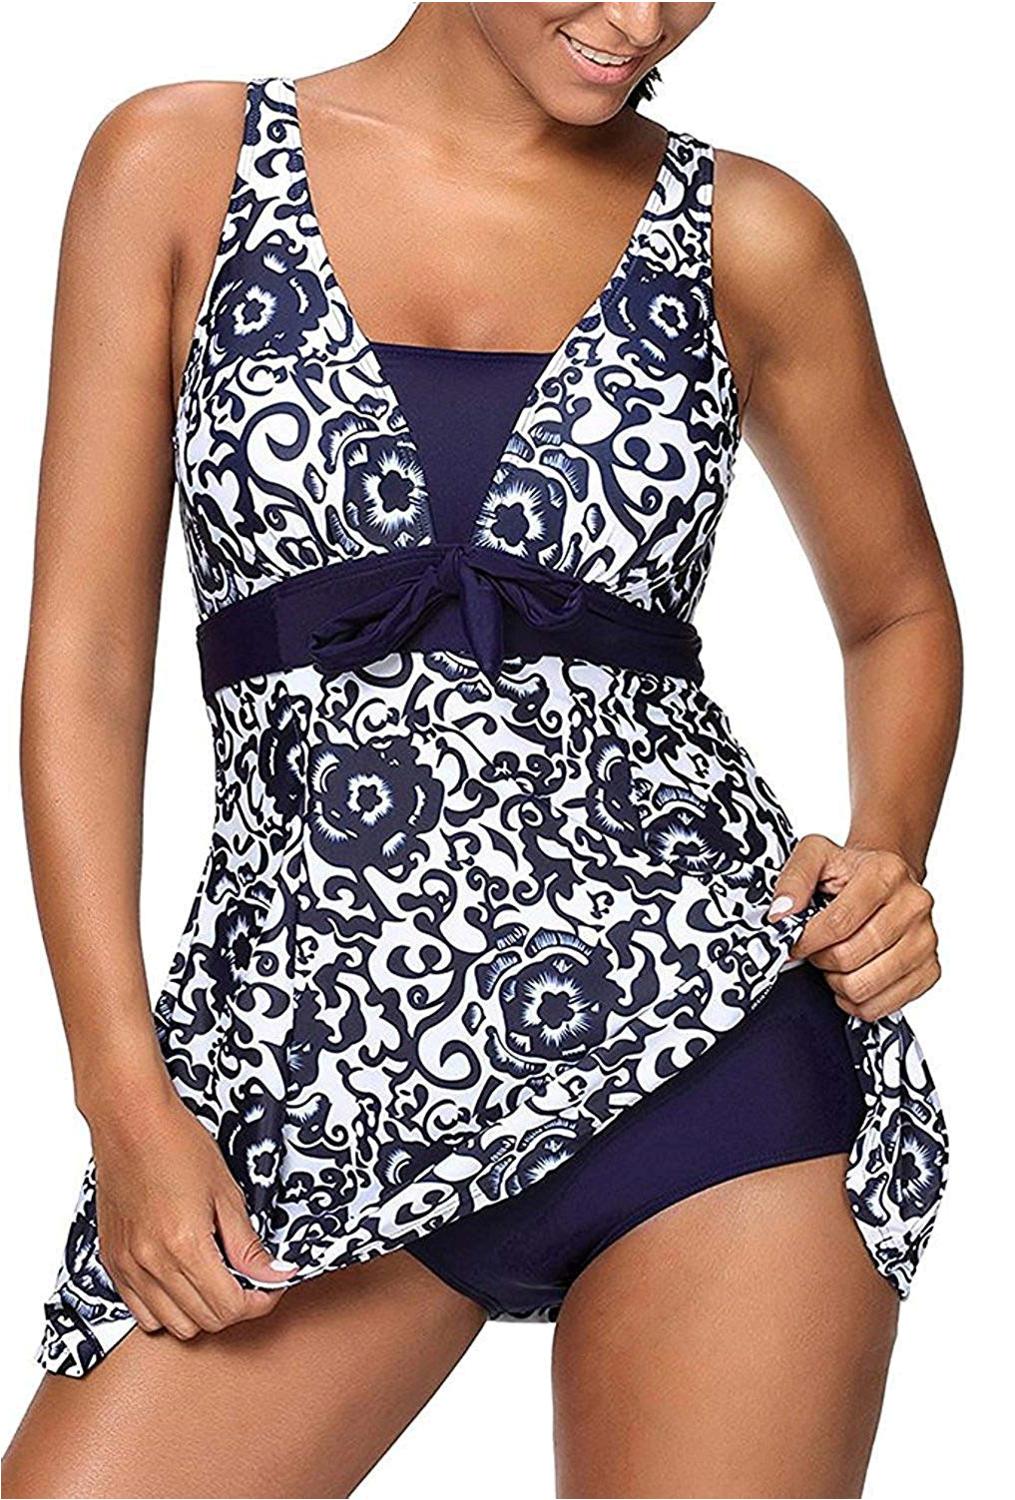 MiYang Women's Bowknot Printing Skirt Spa Swimsuit Padded, Blue, Size 2 ...